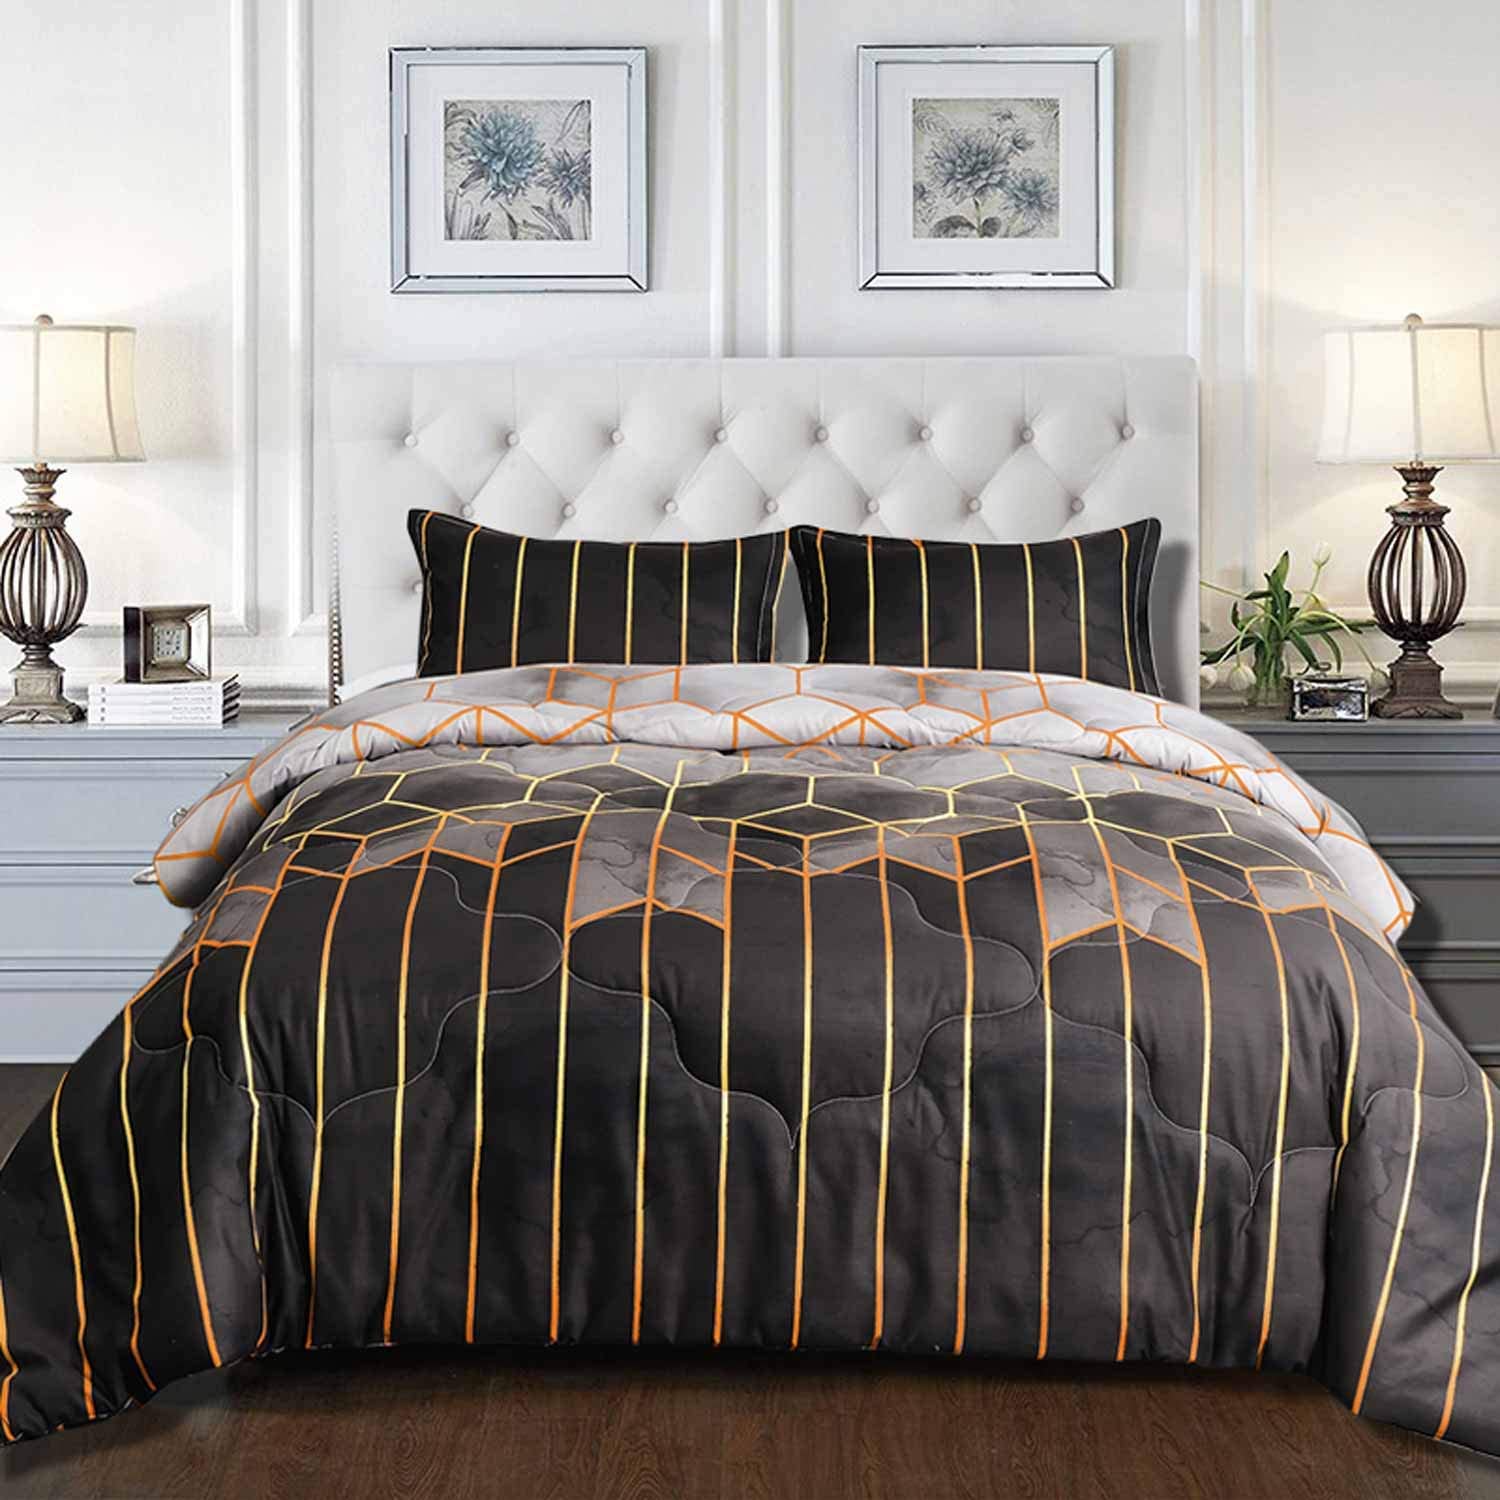 Details about   NANKO Queen Comforter Set Grey Boho Geometry Striped Print 3pc 88x90 inch Soft R 